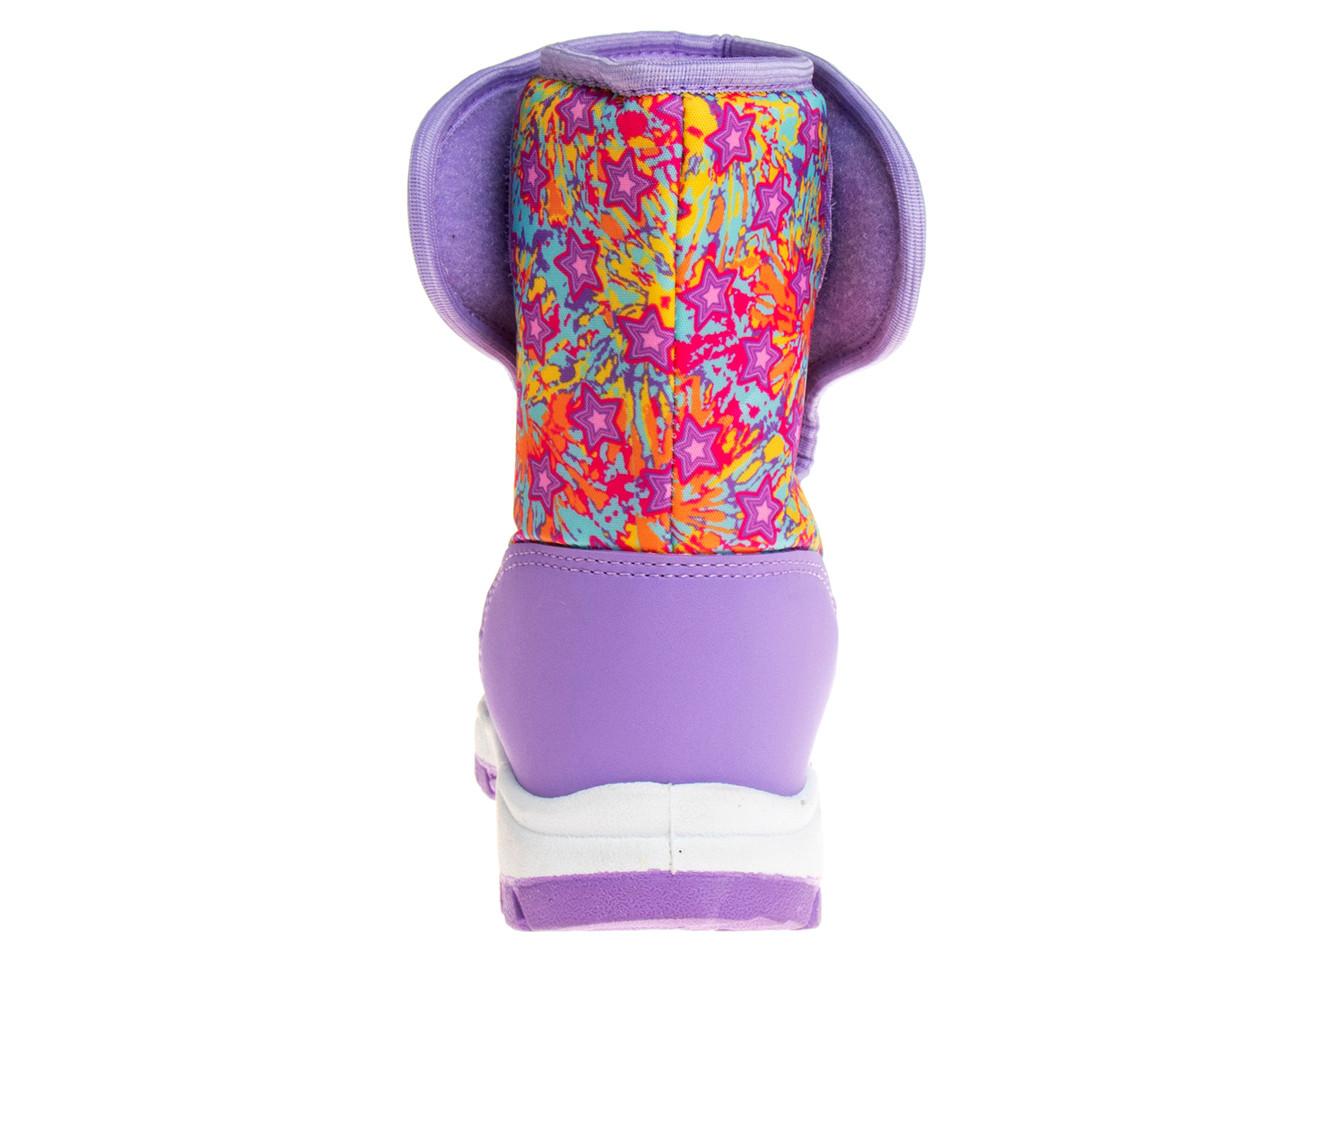 Girls' Rugged Bear Little Kid & Big Kid Flower Colorsplash Winter Boots